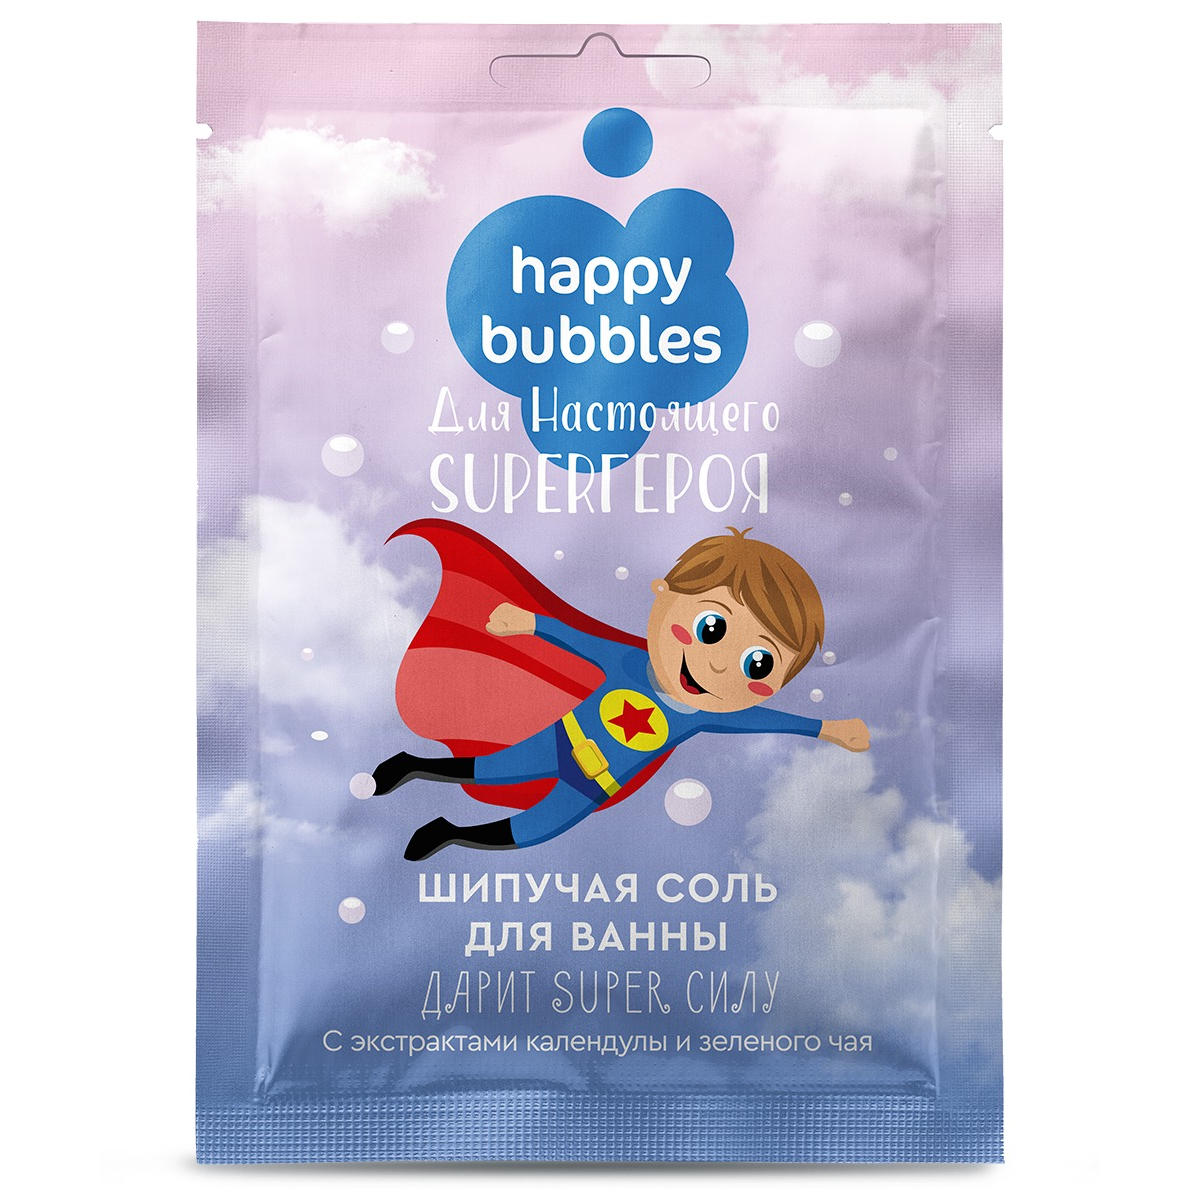 Соль для ванны Happy bubbles для настоя Super героя 100г соль для ванны